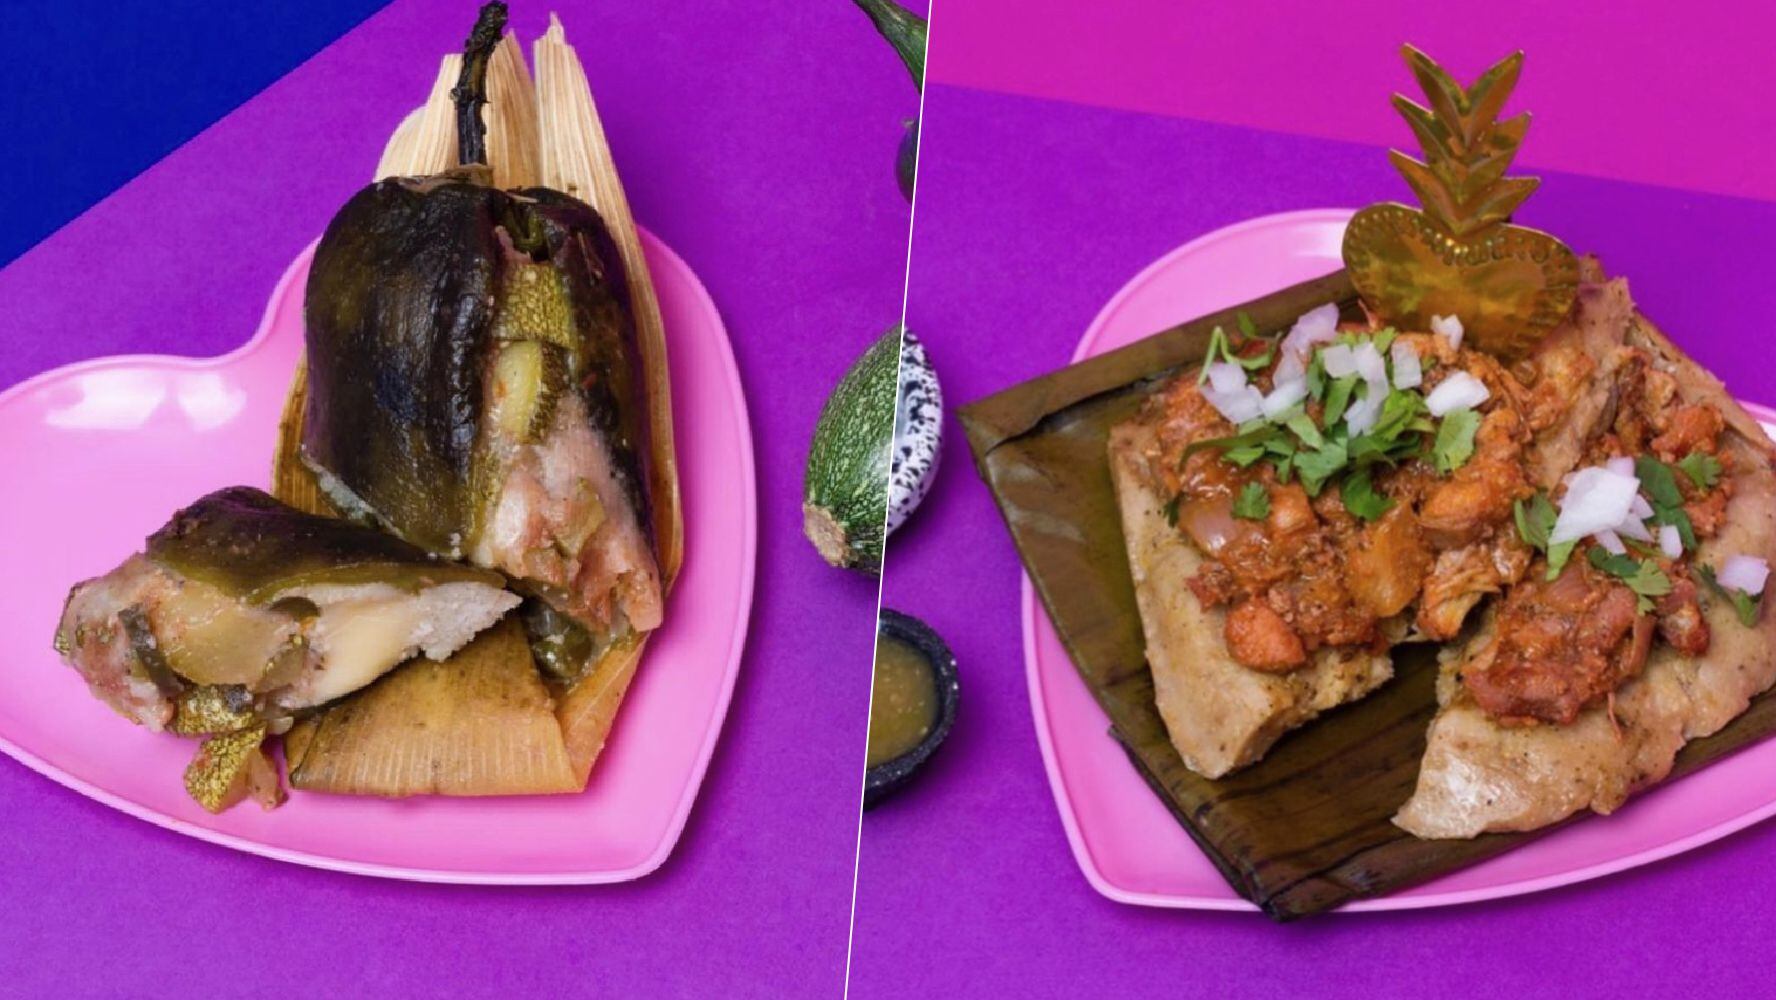 En Doña Vero se ofertan tamales hasta de carne al pastor. (Foto: Instagram / @donaveromx)